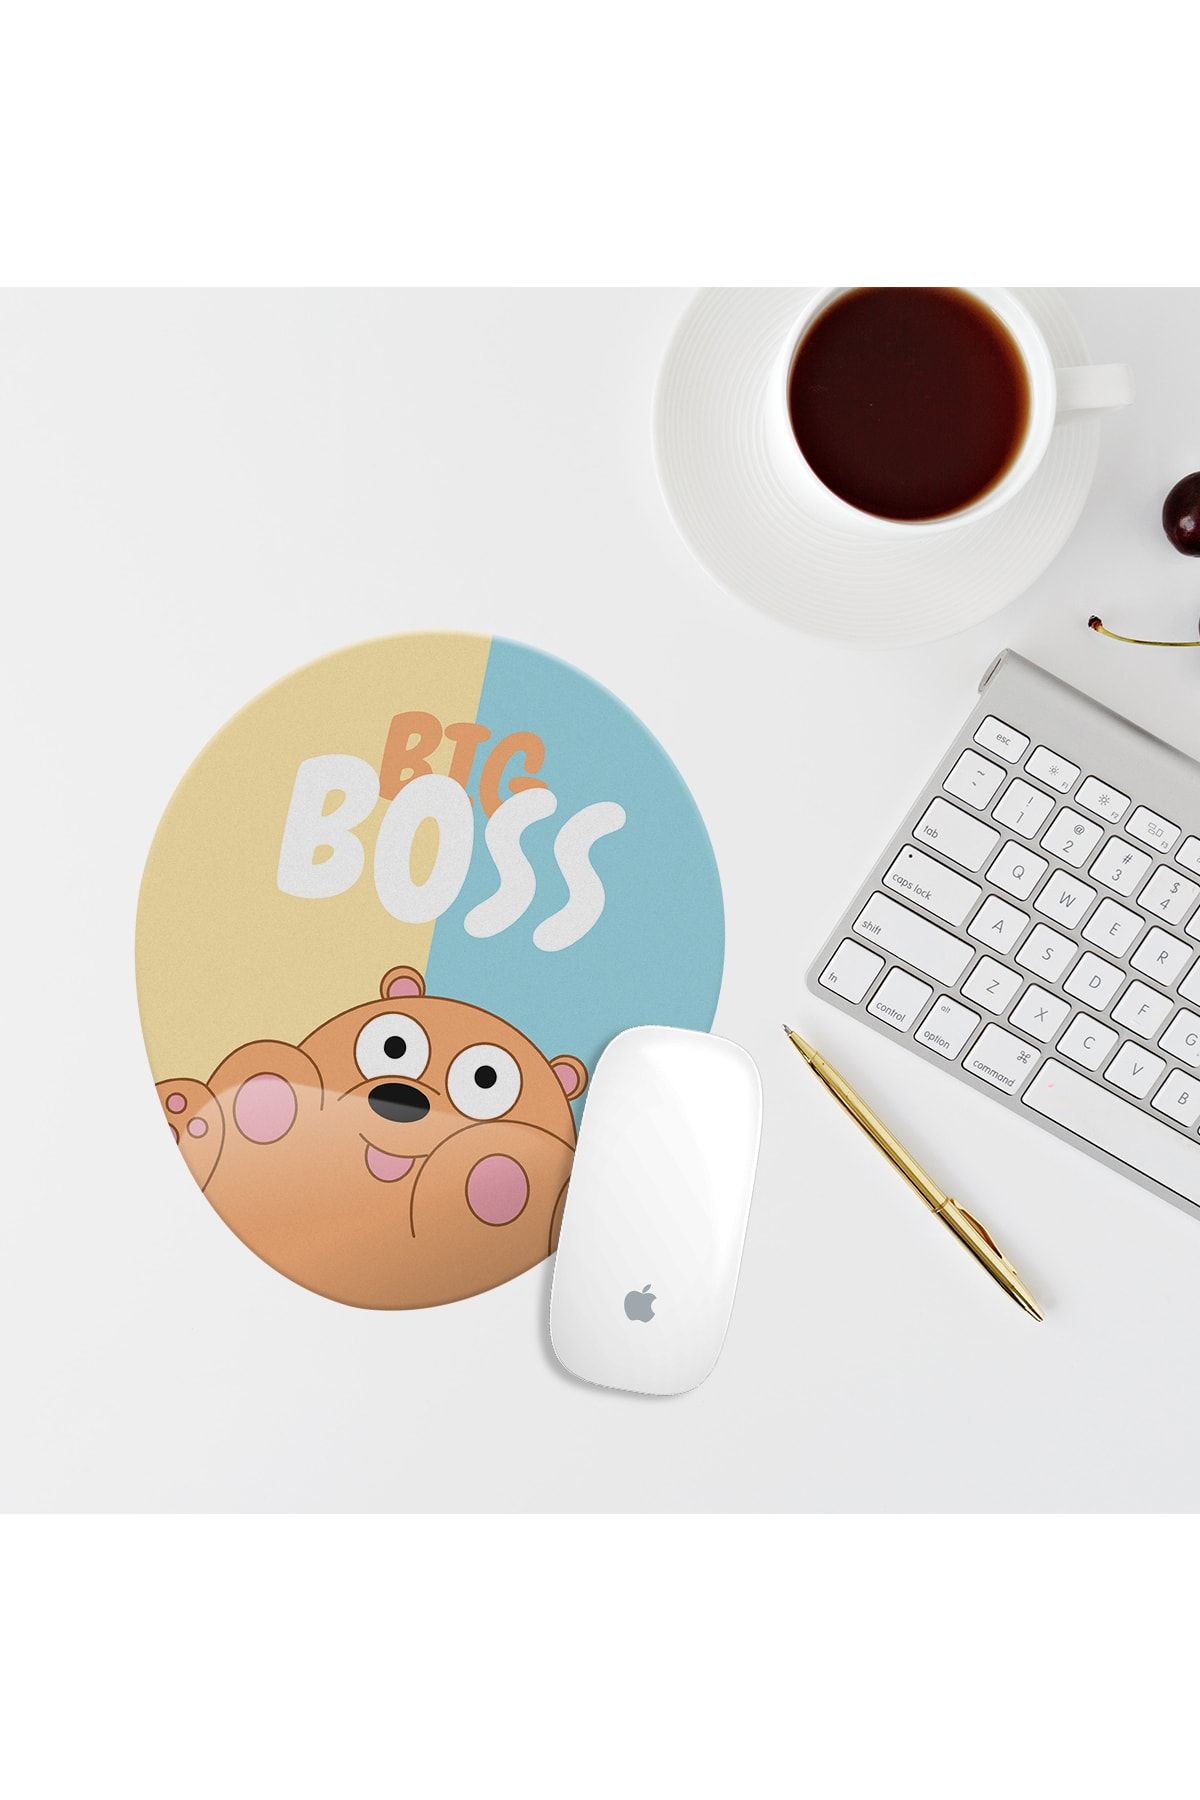 Özer Store Big Boss Ayıcıklı Bilek Destekli Oval Mouse Pad